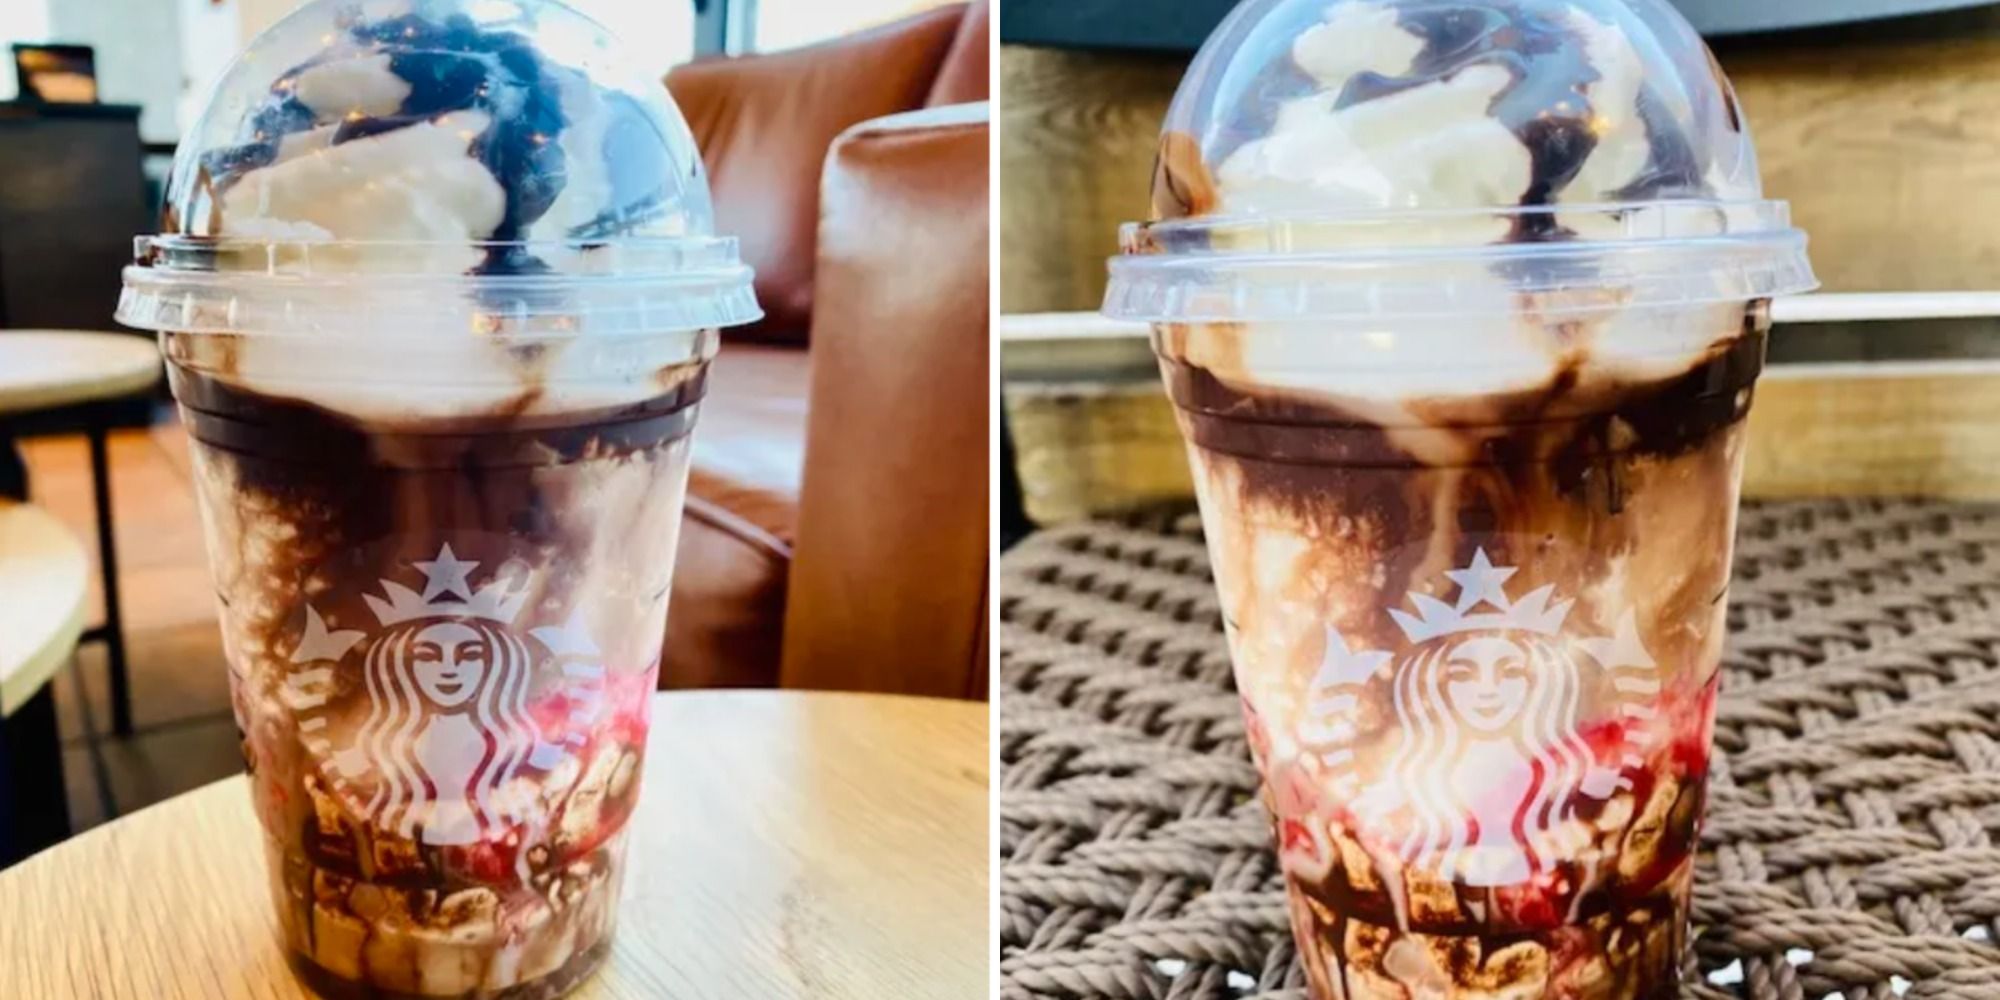 How to Order Starbucks's Secret Wonder Woman Frappuccino